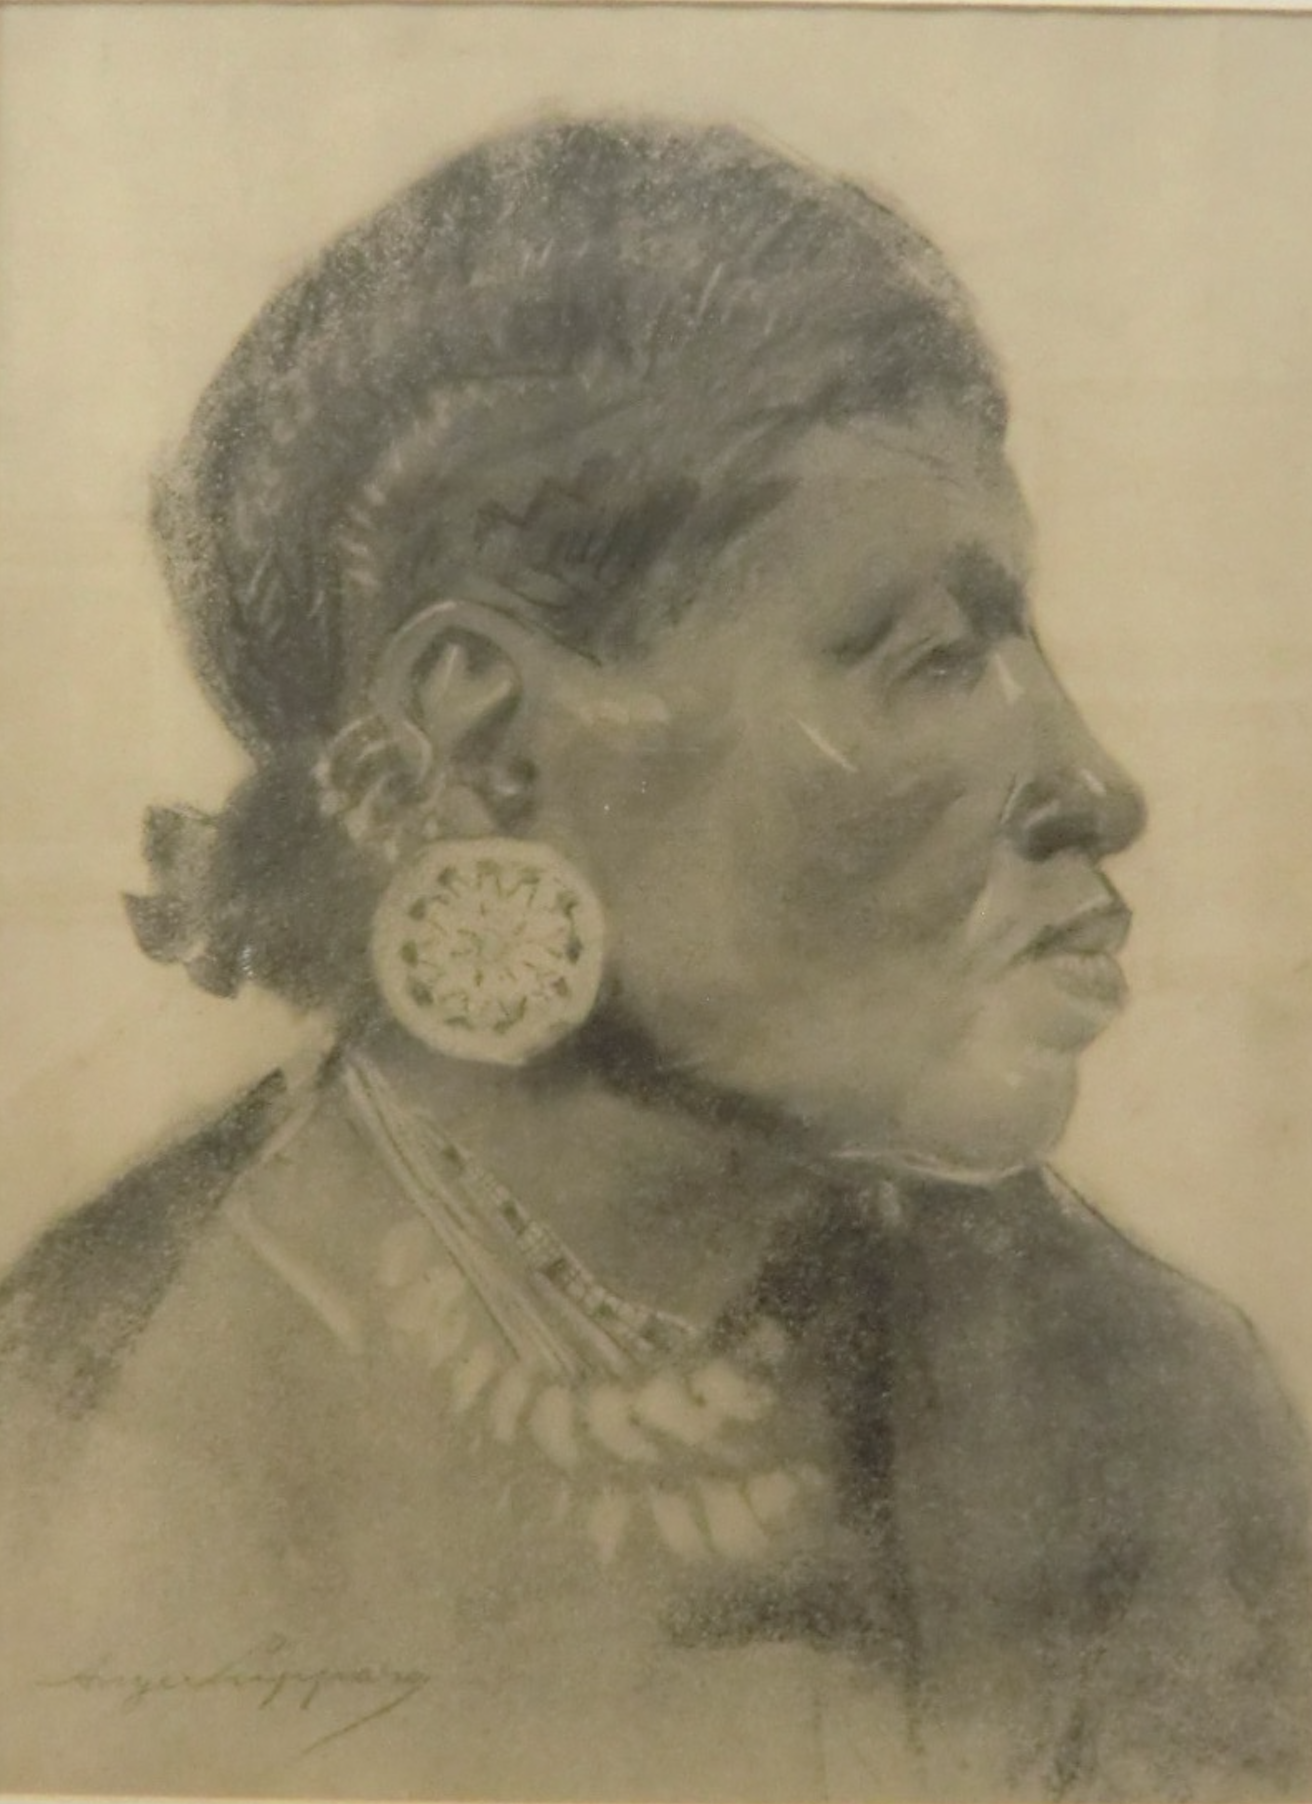 SUPPARO Ange ( 1870 - 1948 ),&nbsp;Portrait de Femme malgache Antakarana,&nbsp;1914,&nbsp;Fusain sur papier,&nbsp;33 x 41 cm,&nbsp;Signé en bas à gauche,&nbsp;Titré au dos